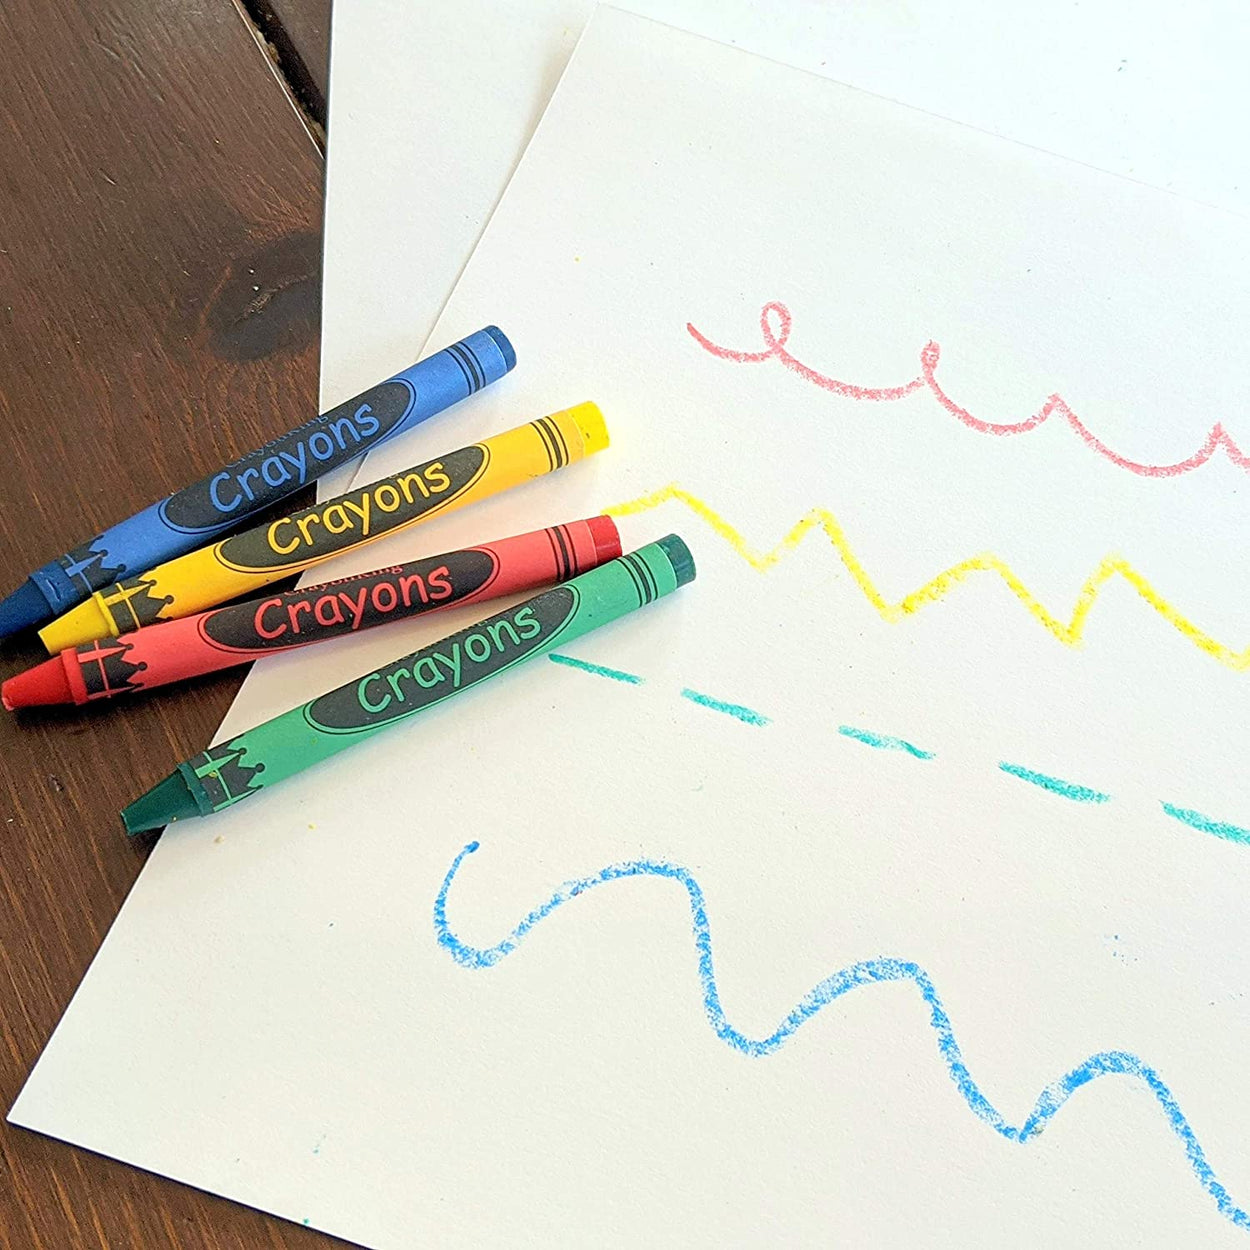 Bulk Crayons - 2000 Crayons (500 Packs of 4 Crayons - 1 each of